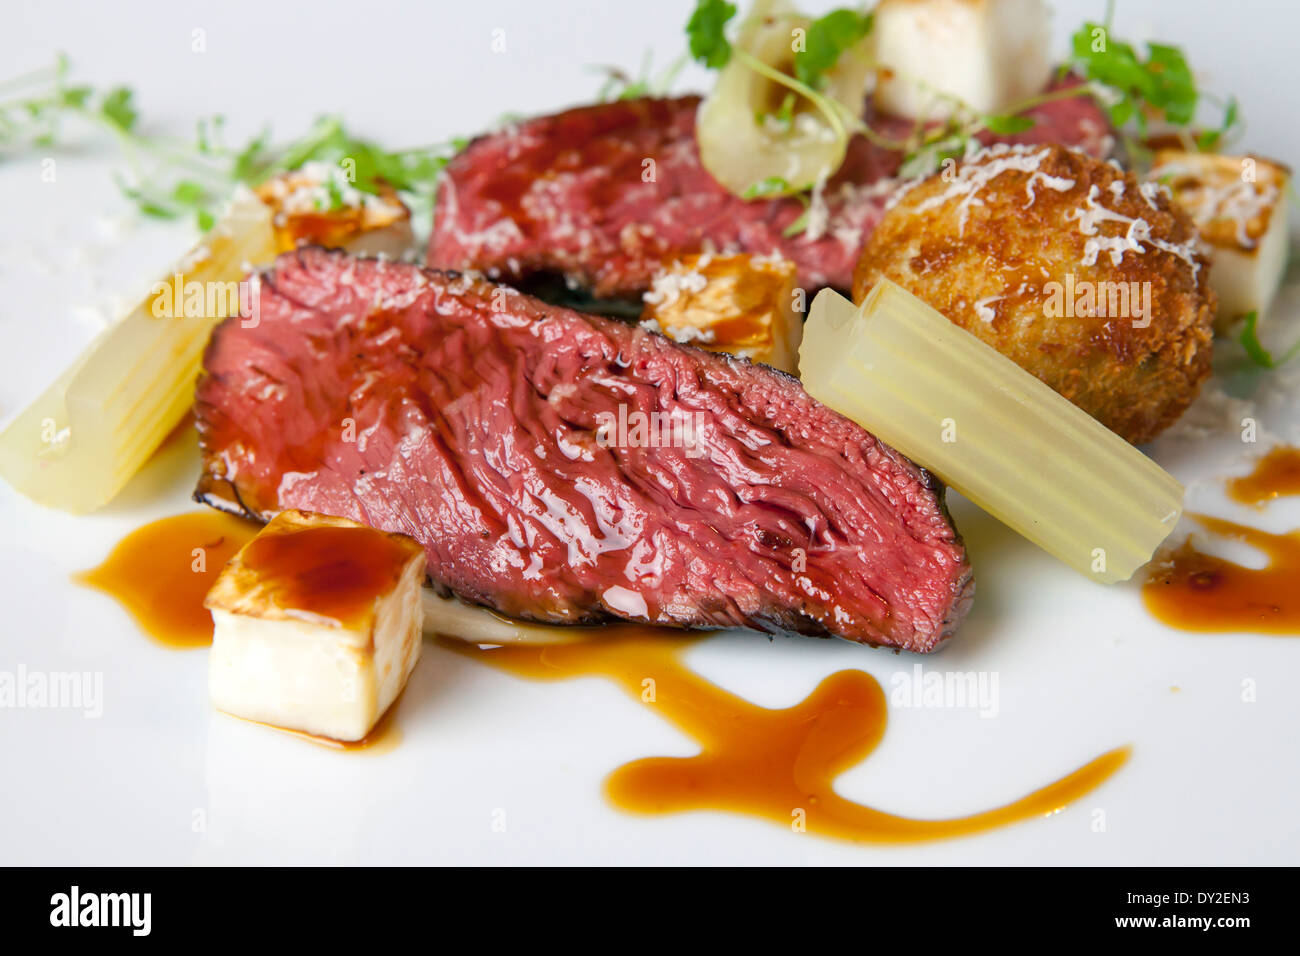 Beautifully presented restaurant quality rare steak Stock Photo